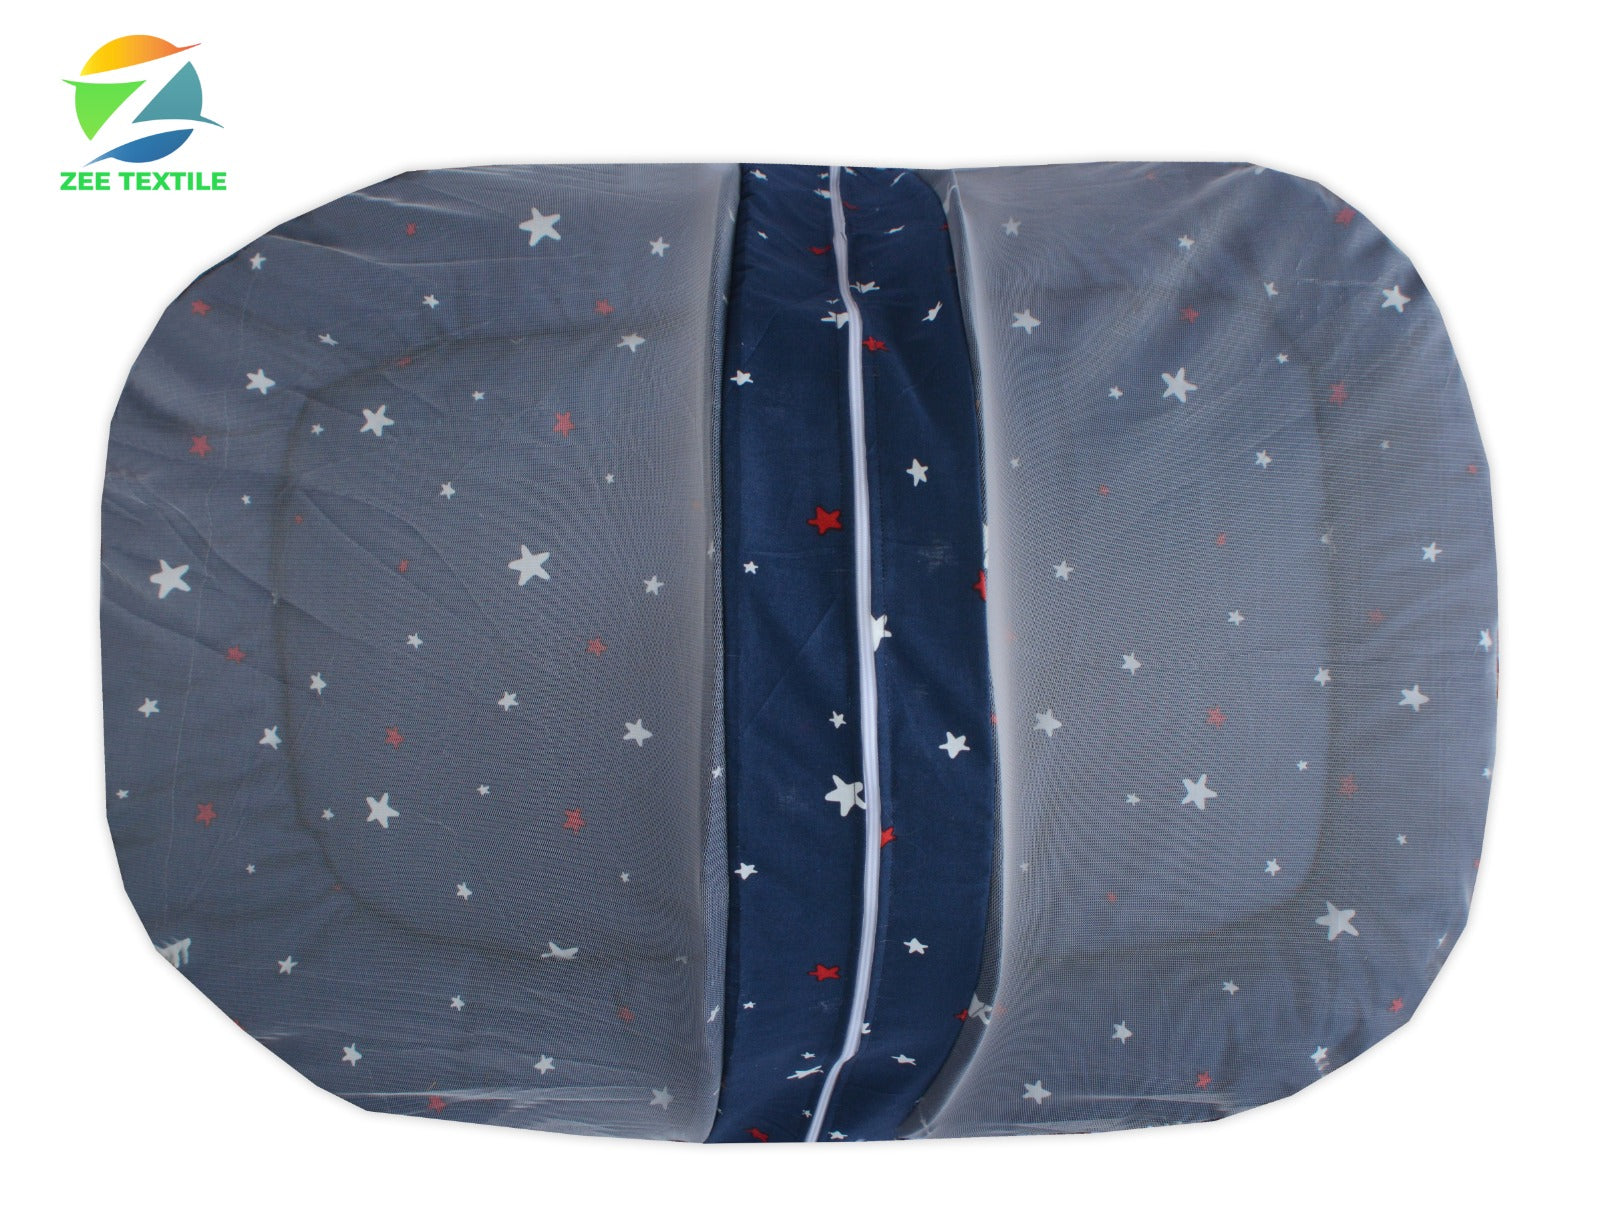 Baby Sleeping Mosquito Net set with 3 pillows-Dark Blue